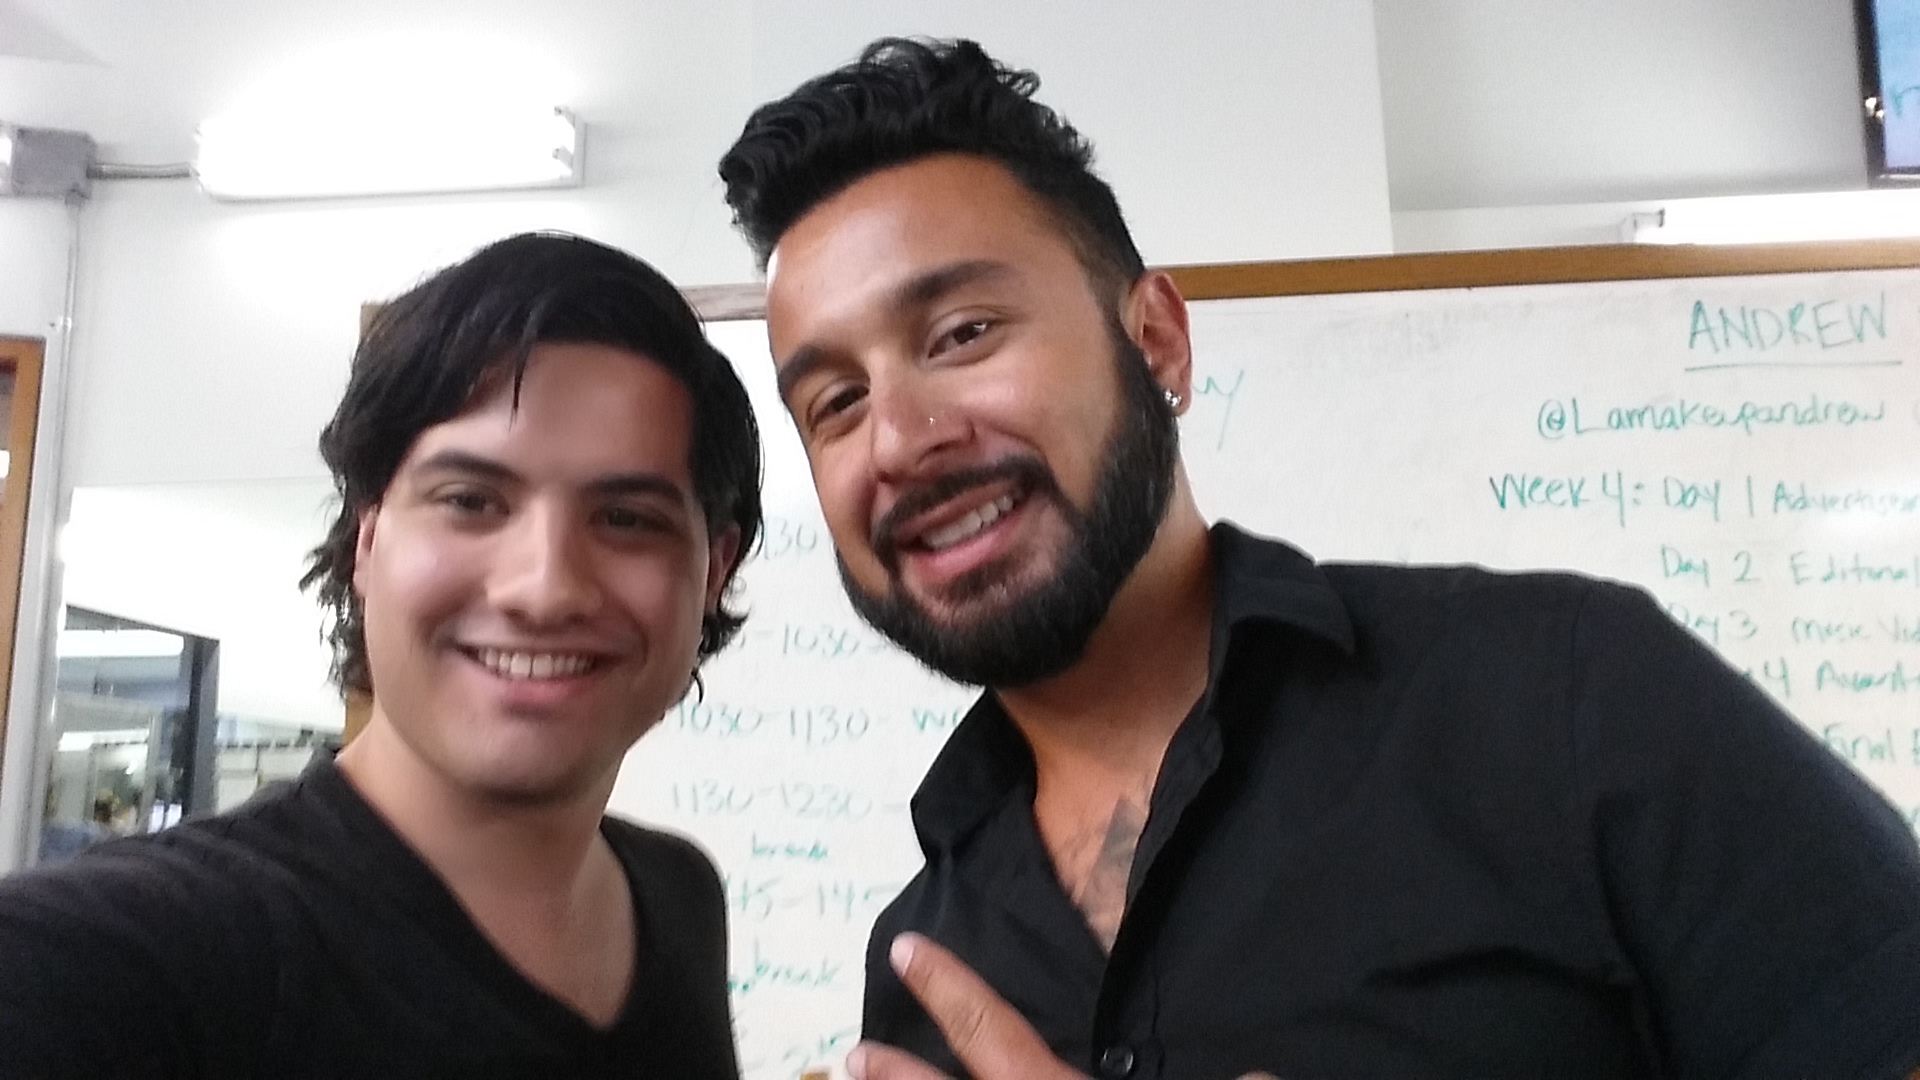 Me with my makeup teacher Andrew Velazquez